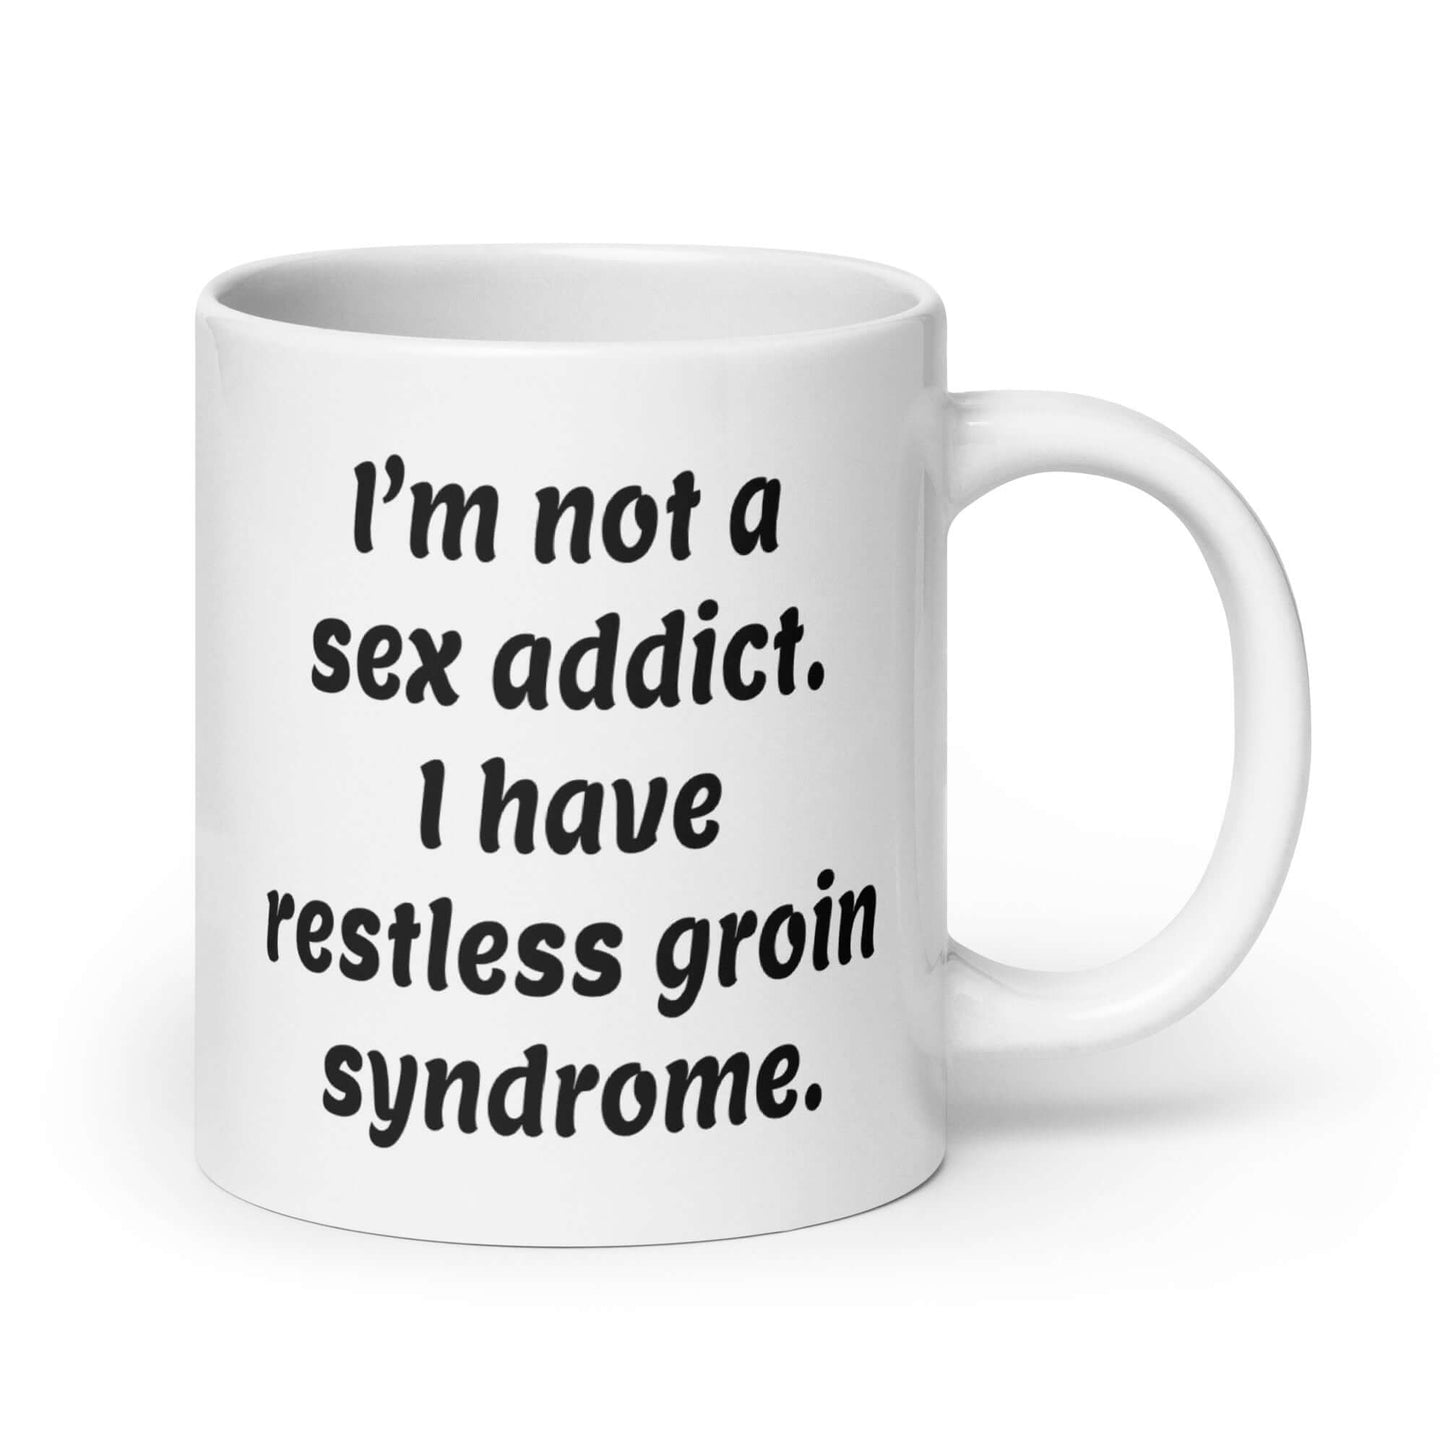 I'm not a sex addict funny restless groin syndrome mug